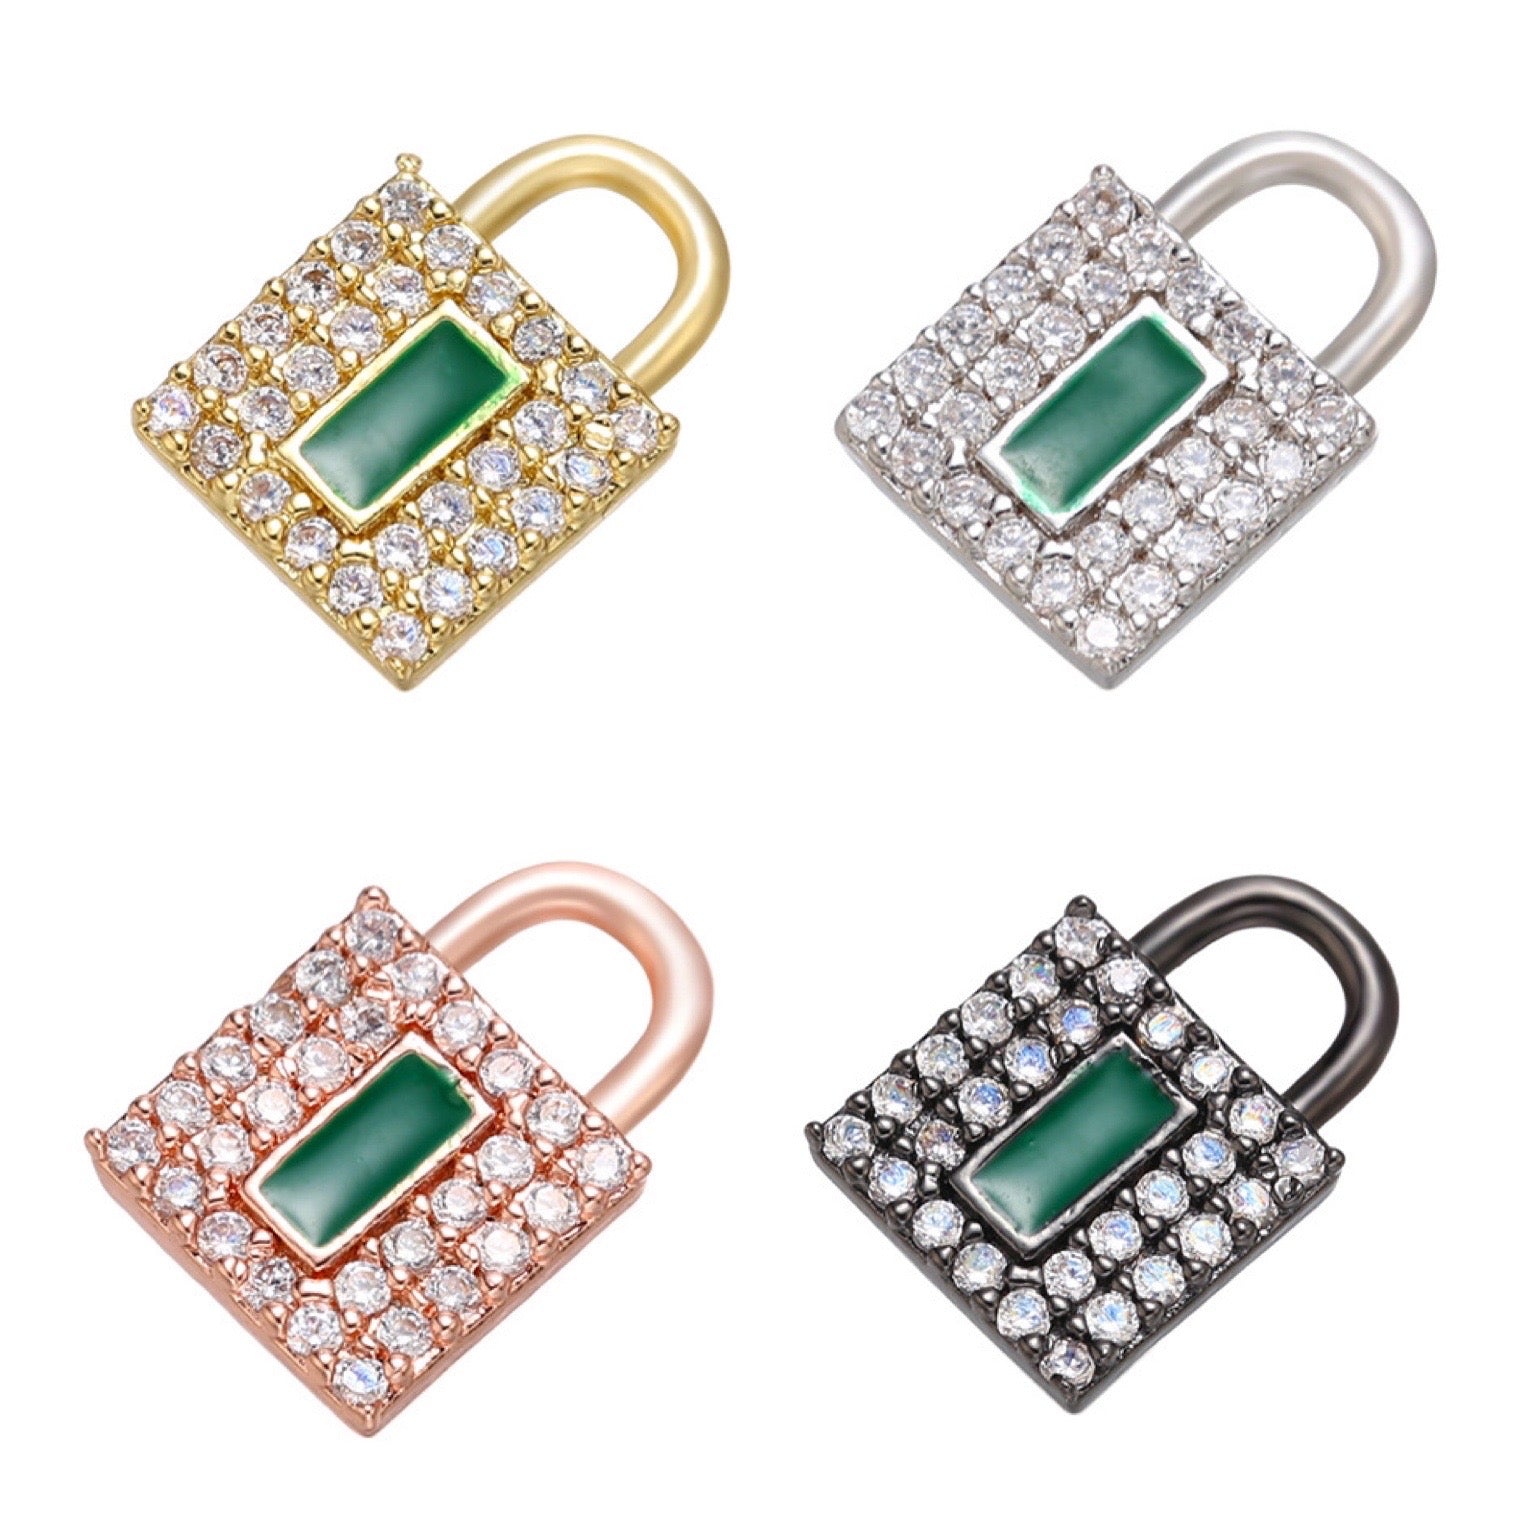 10pcs/lot 12*8mm CZ Paved Lock Charms Mix Green CZ Paved Charms Keys & Locks Small Sizes Charms Beads Beyond